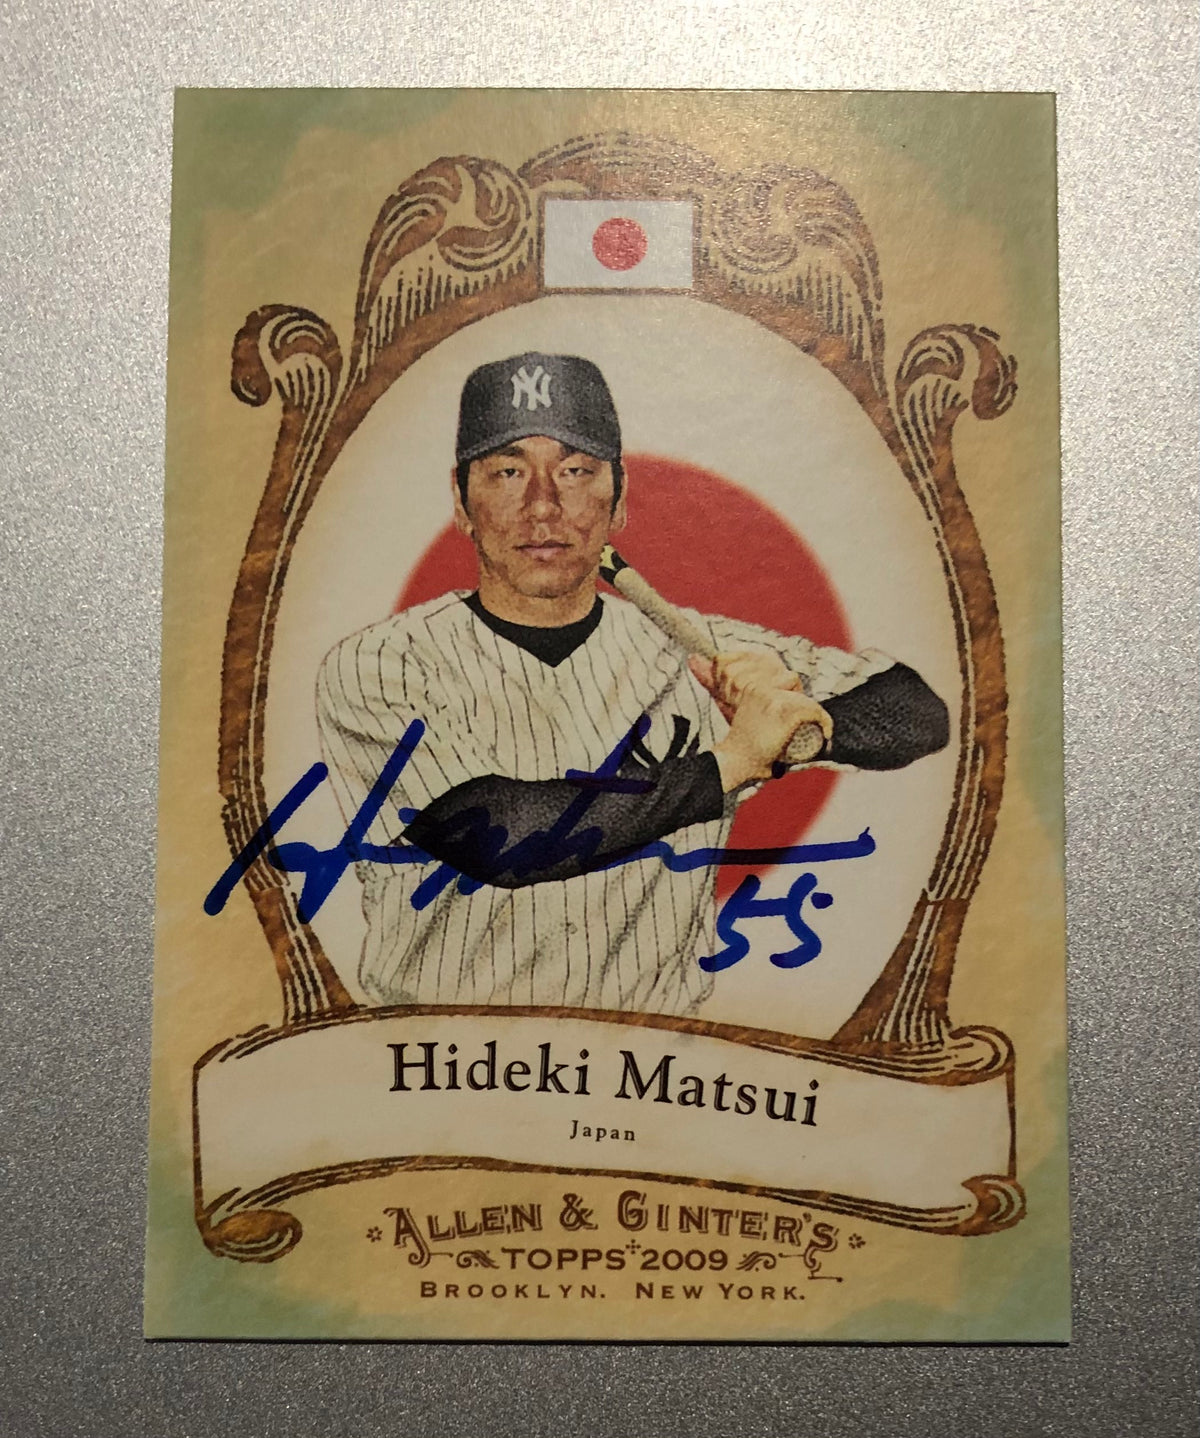 Hideki Matsui Autographed Memorabilia  Signed Photo, Jersey, Collectibles  & Merchandise